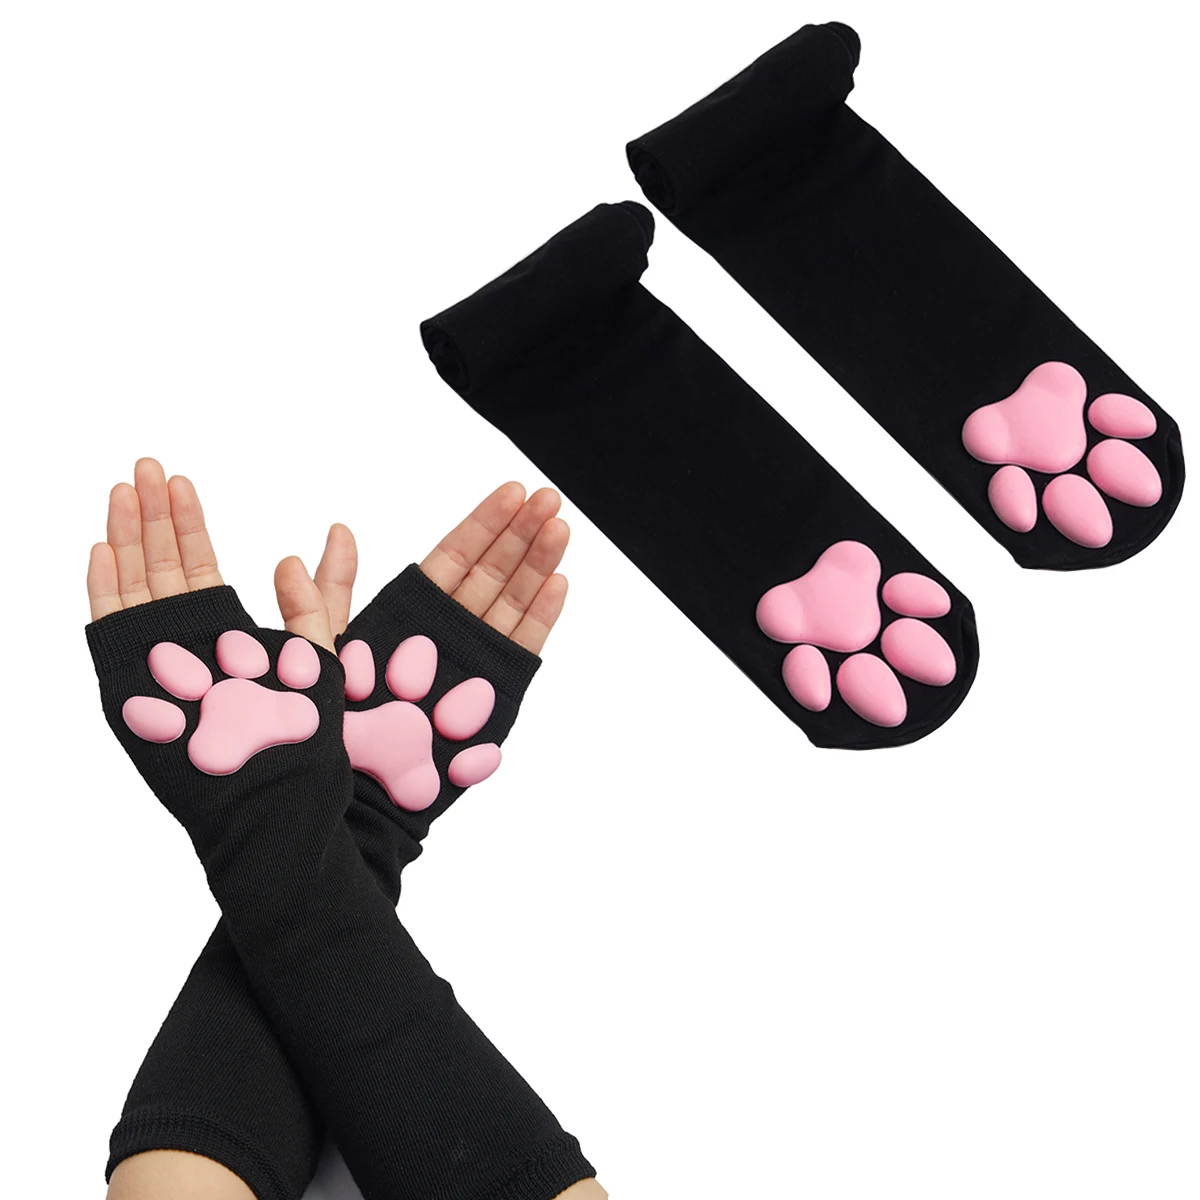 

3D Silicone Cat Paw Gloves Bts Socks Stockings Cute Kitten Fingerless Mittens Pawpads Gloves Women Girls Halloween Cosplay